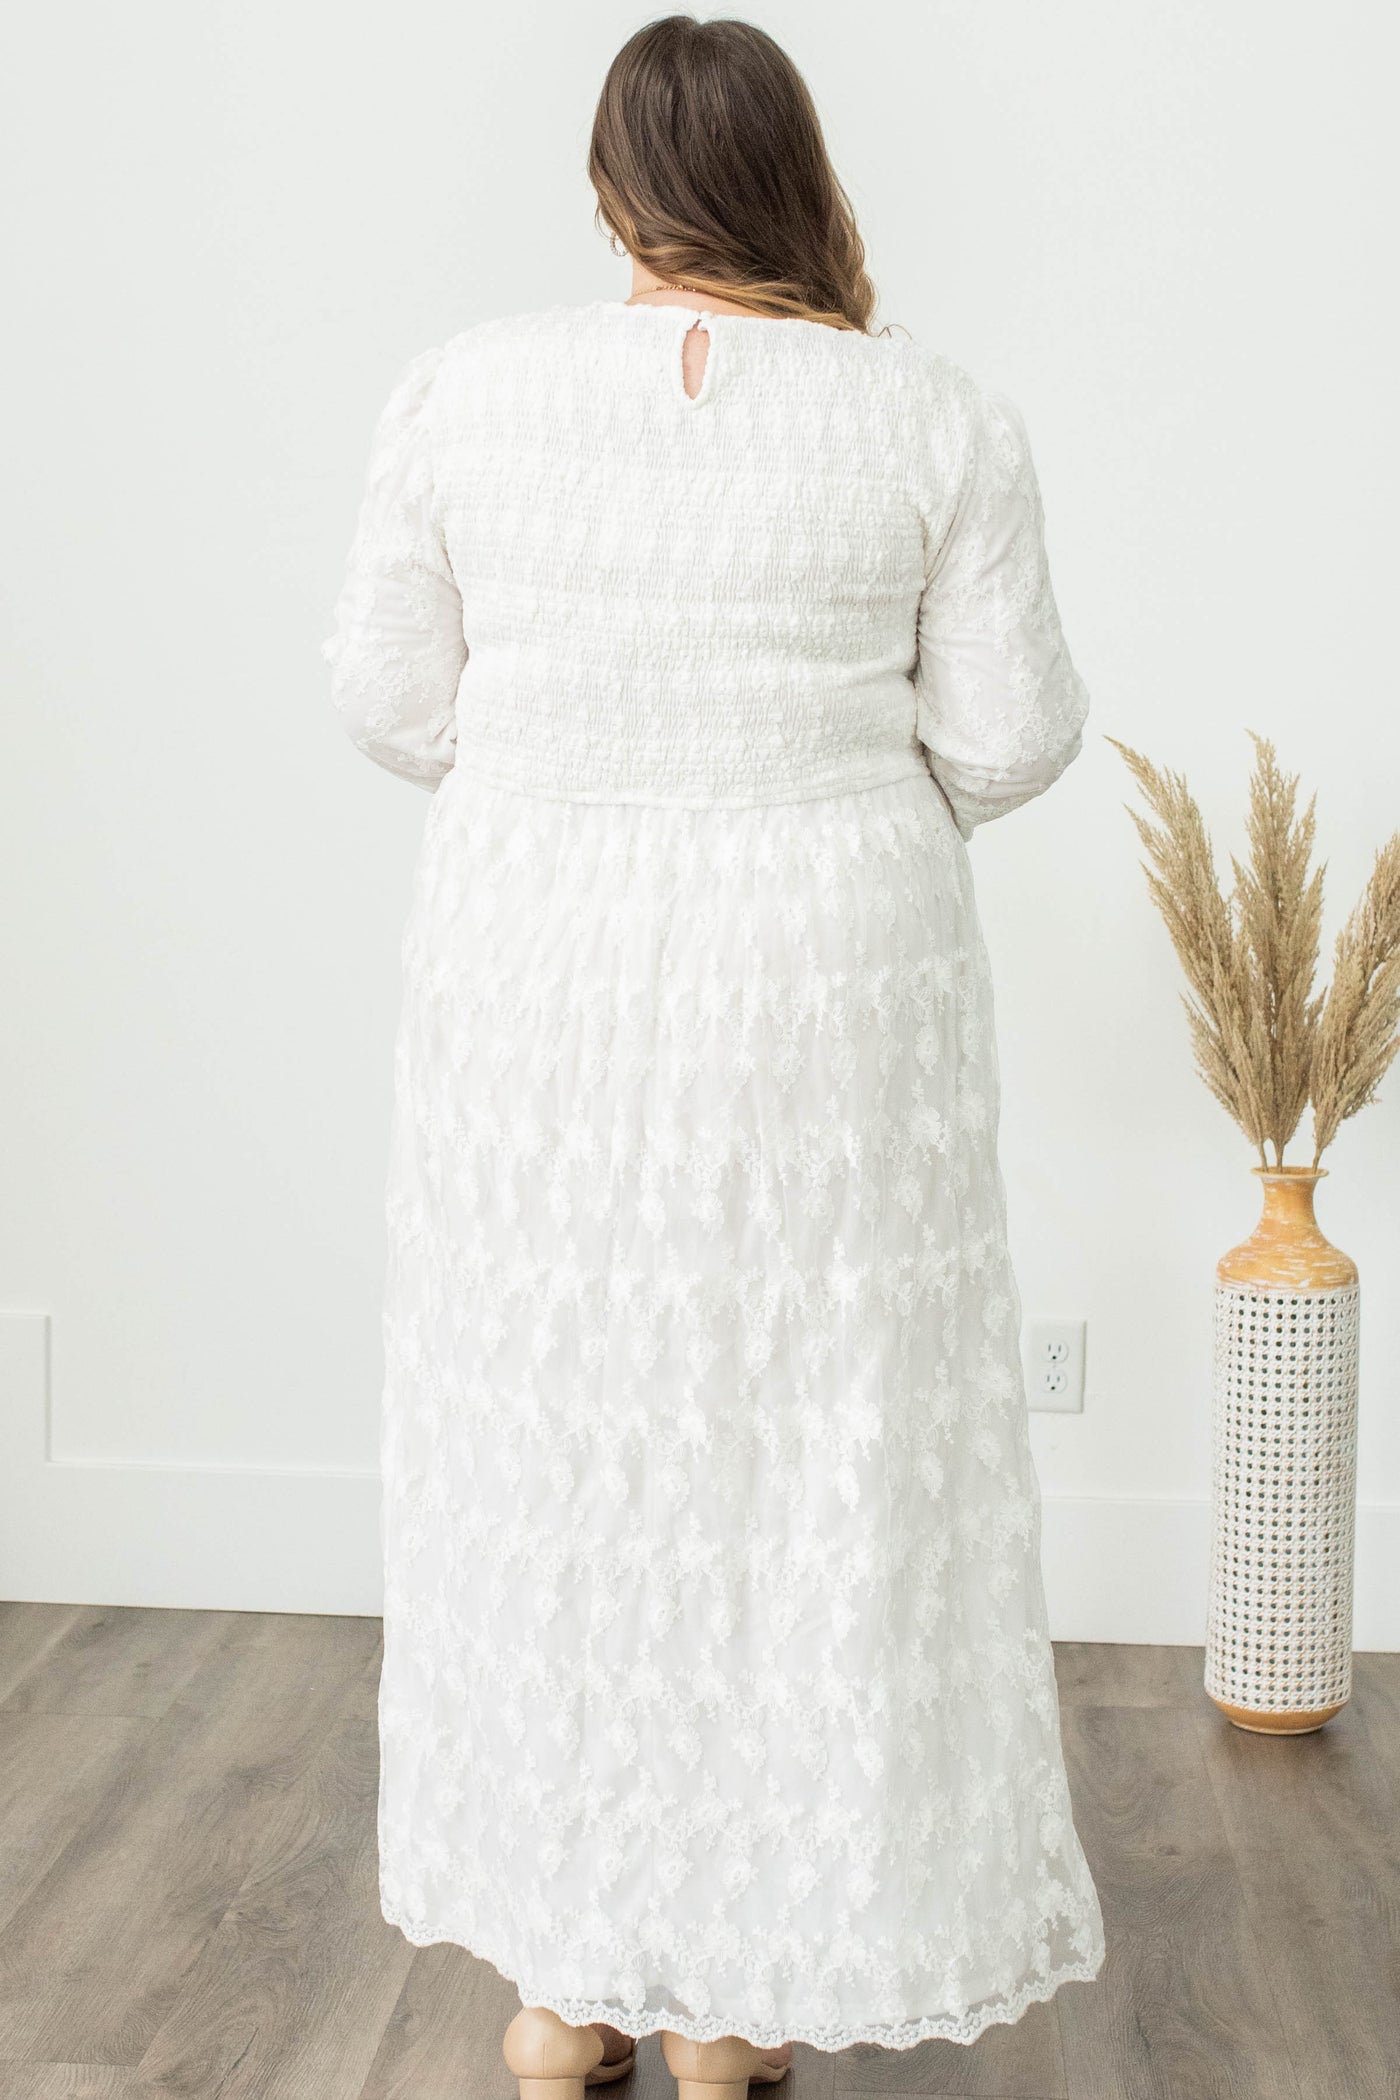 Vianne White Lace Dress